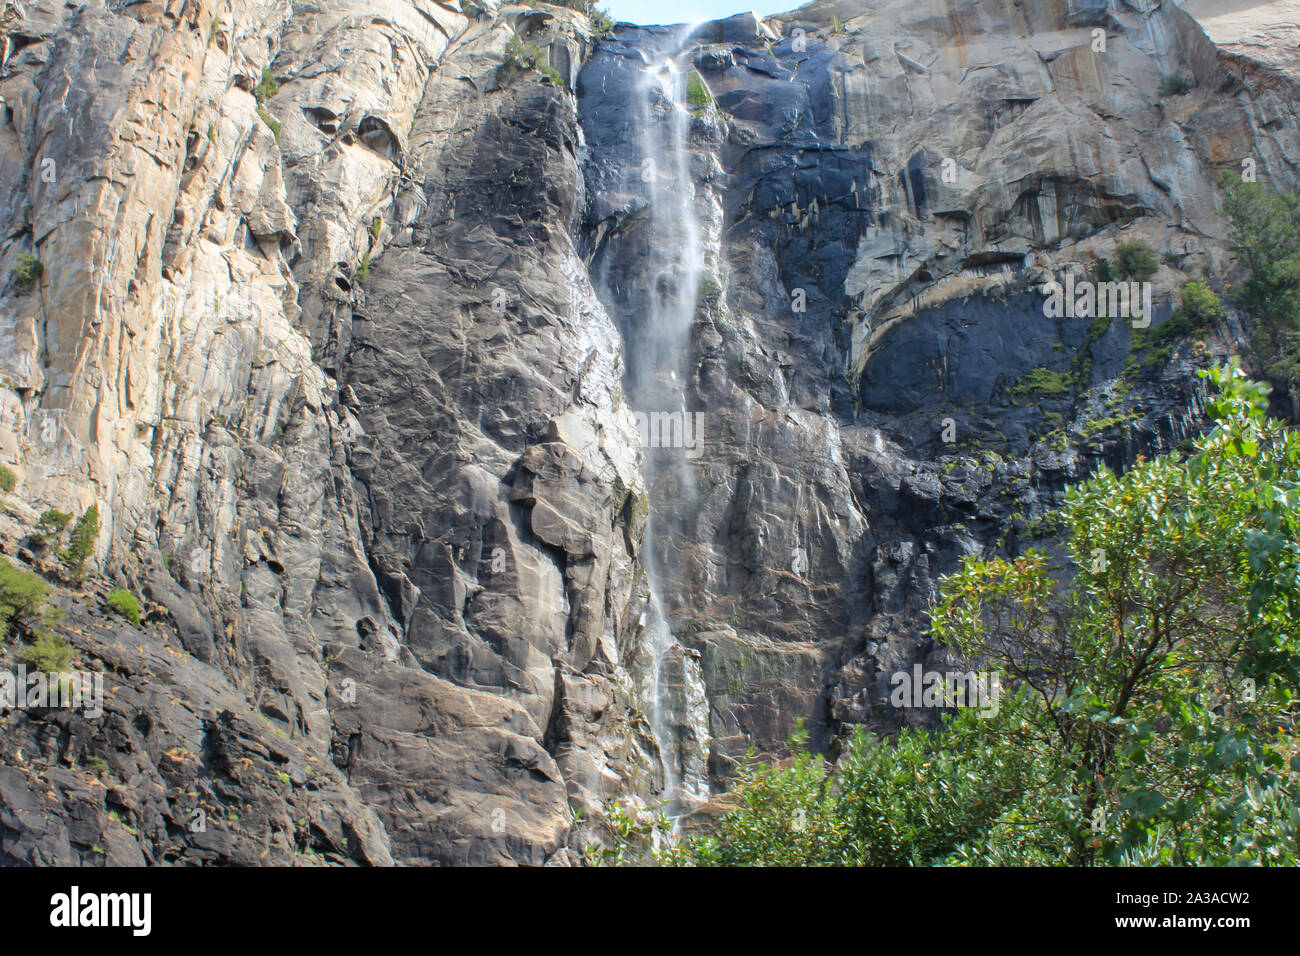 Bridalveil Fall in Yosemite National Park, California, USA Banque D'Images